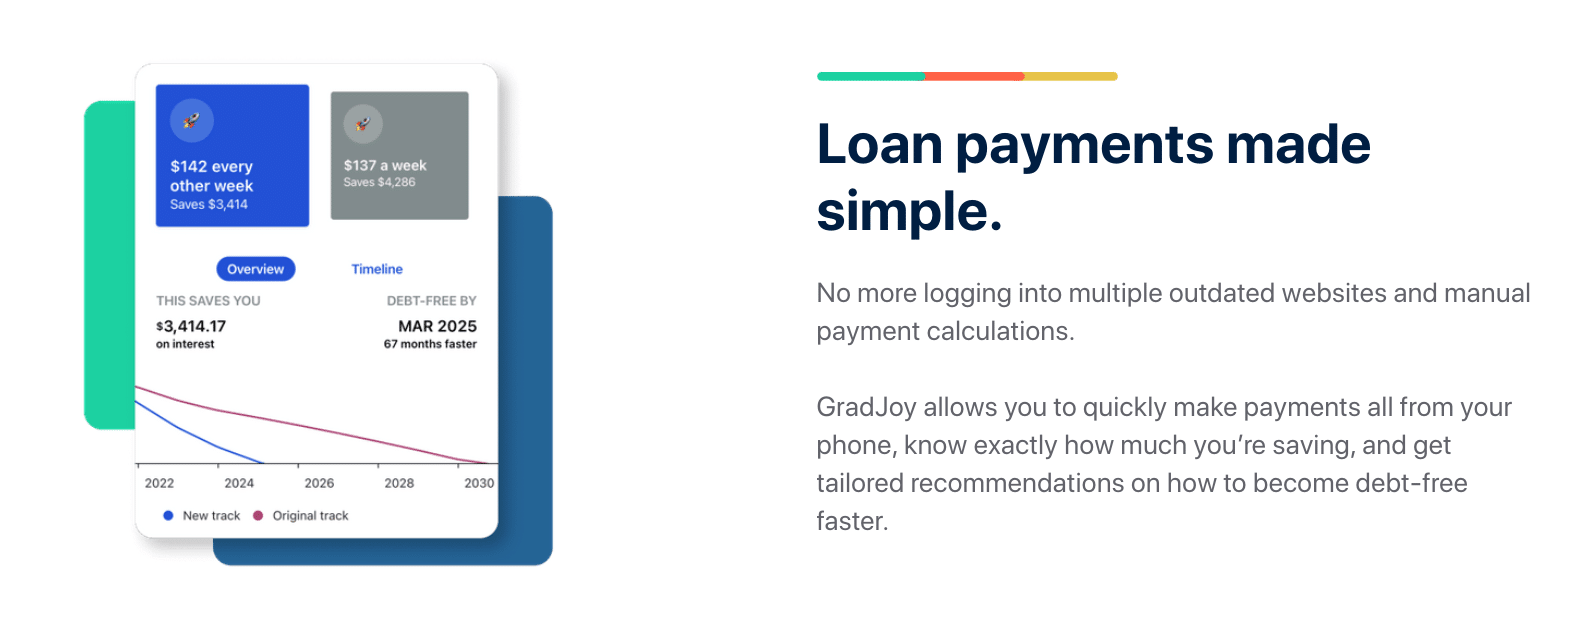 GradJoy loan payments